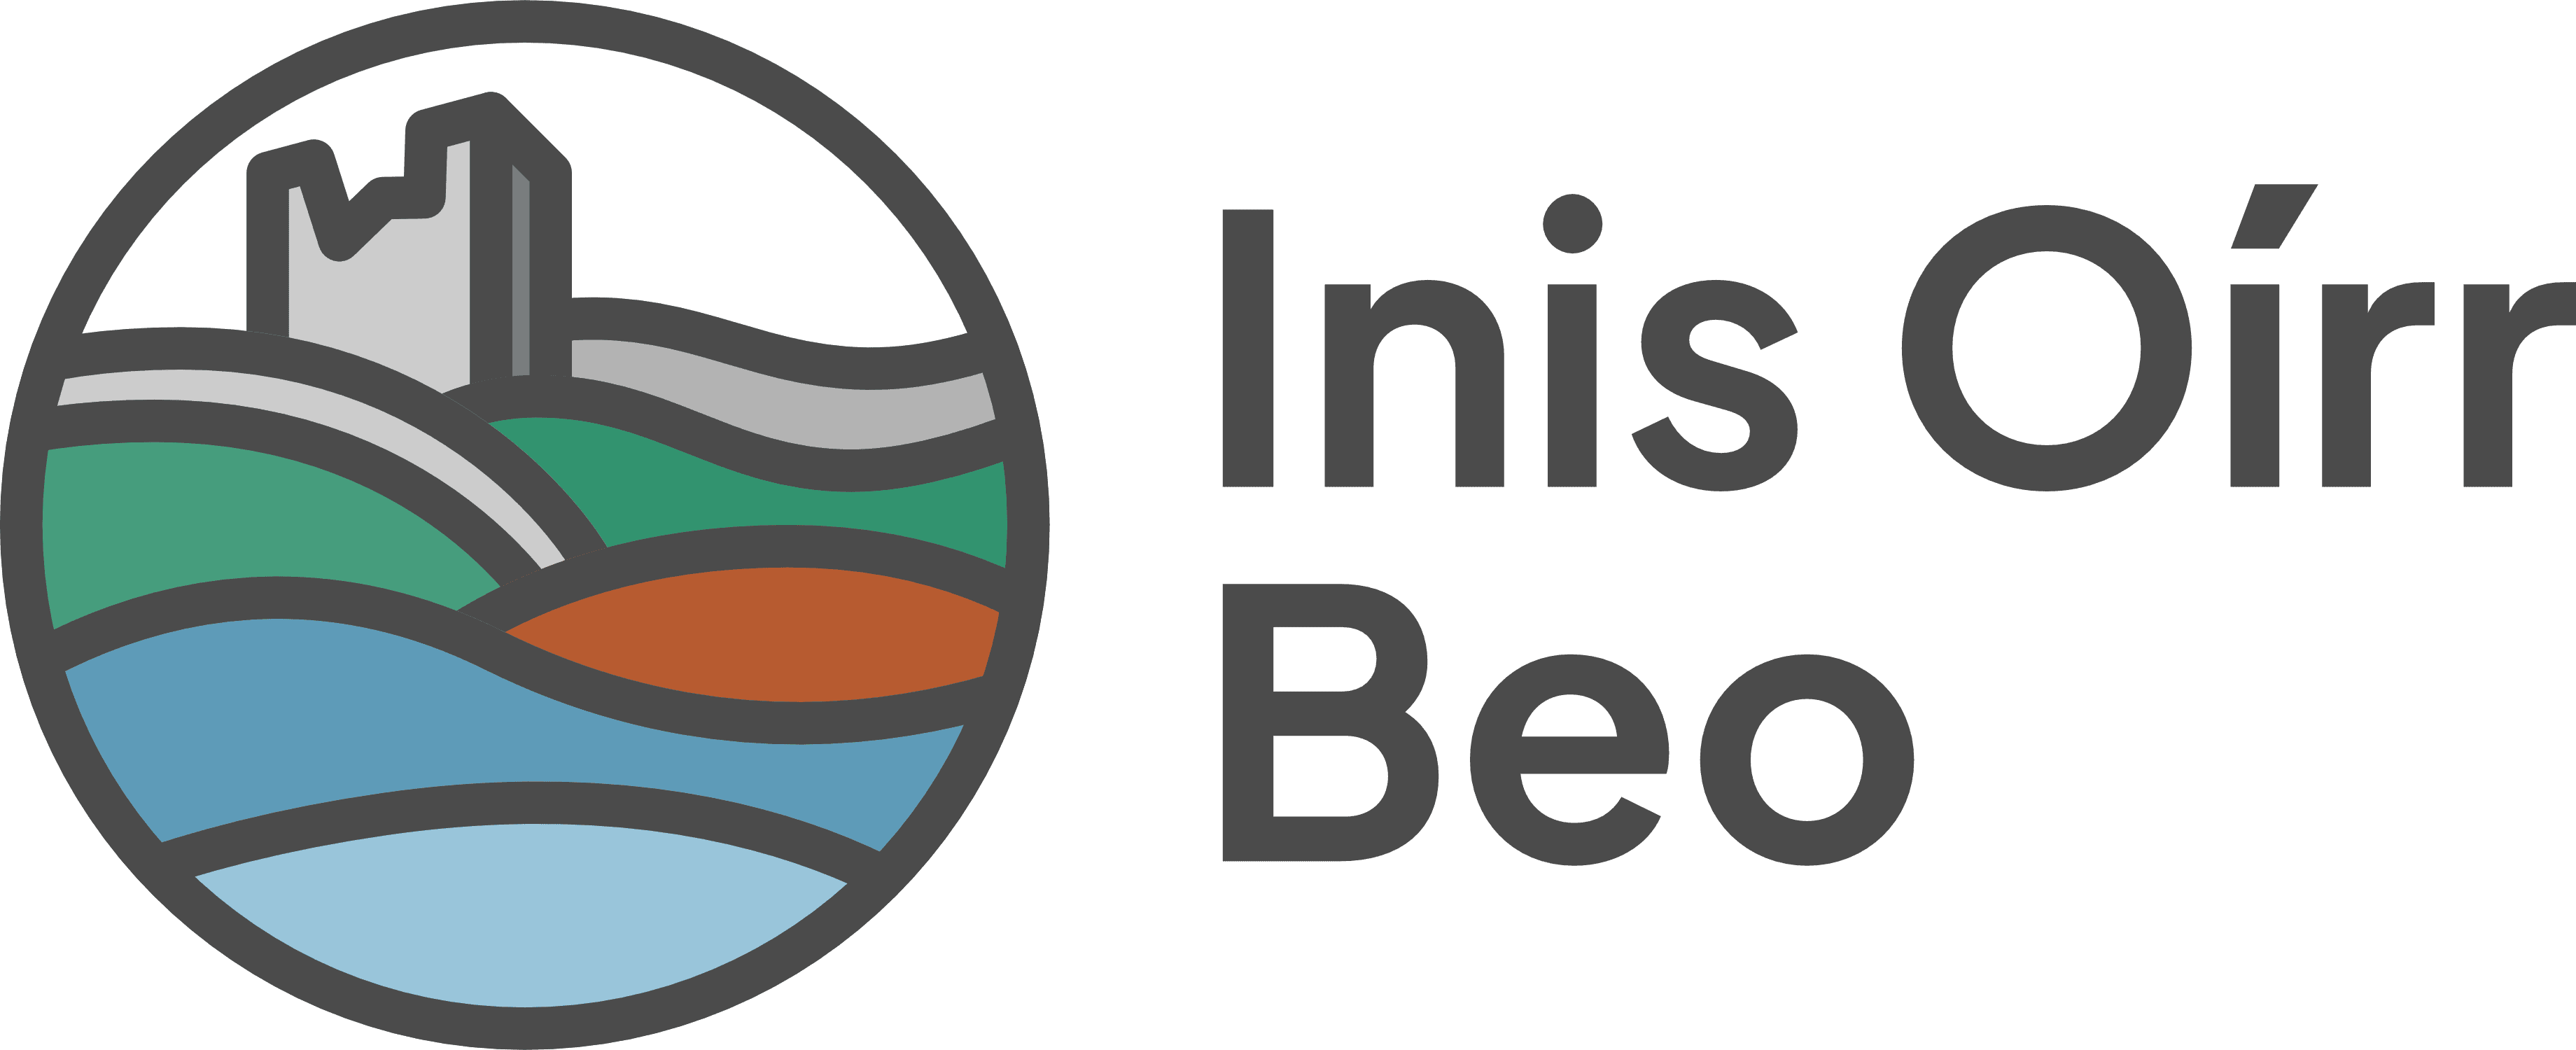 Image Inis Oírr Beo Main Logo